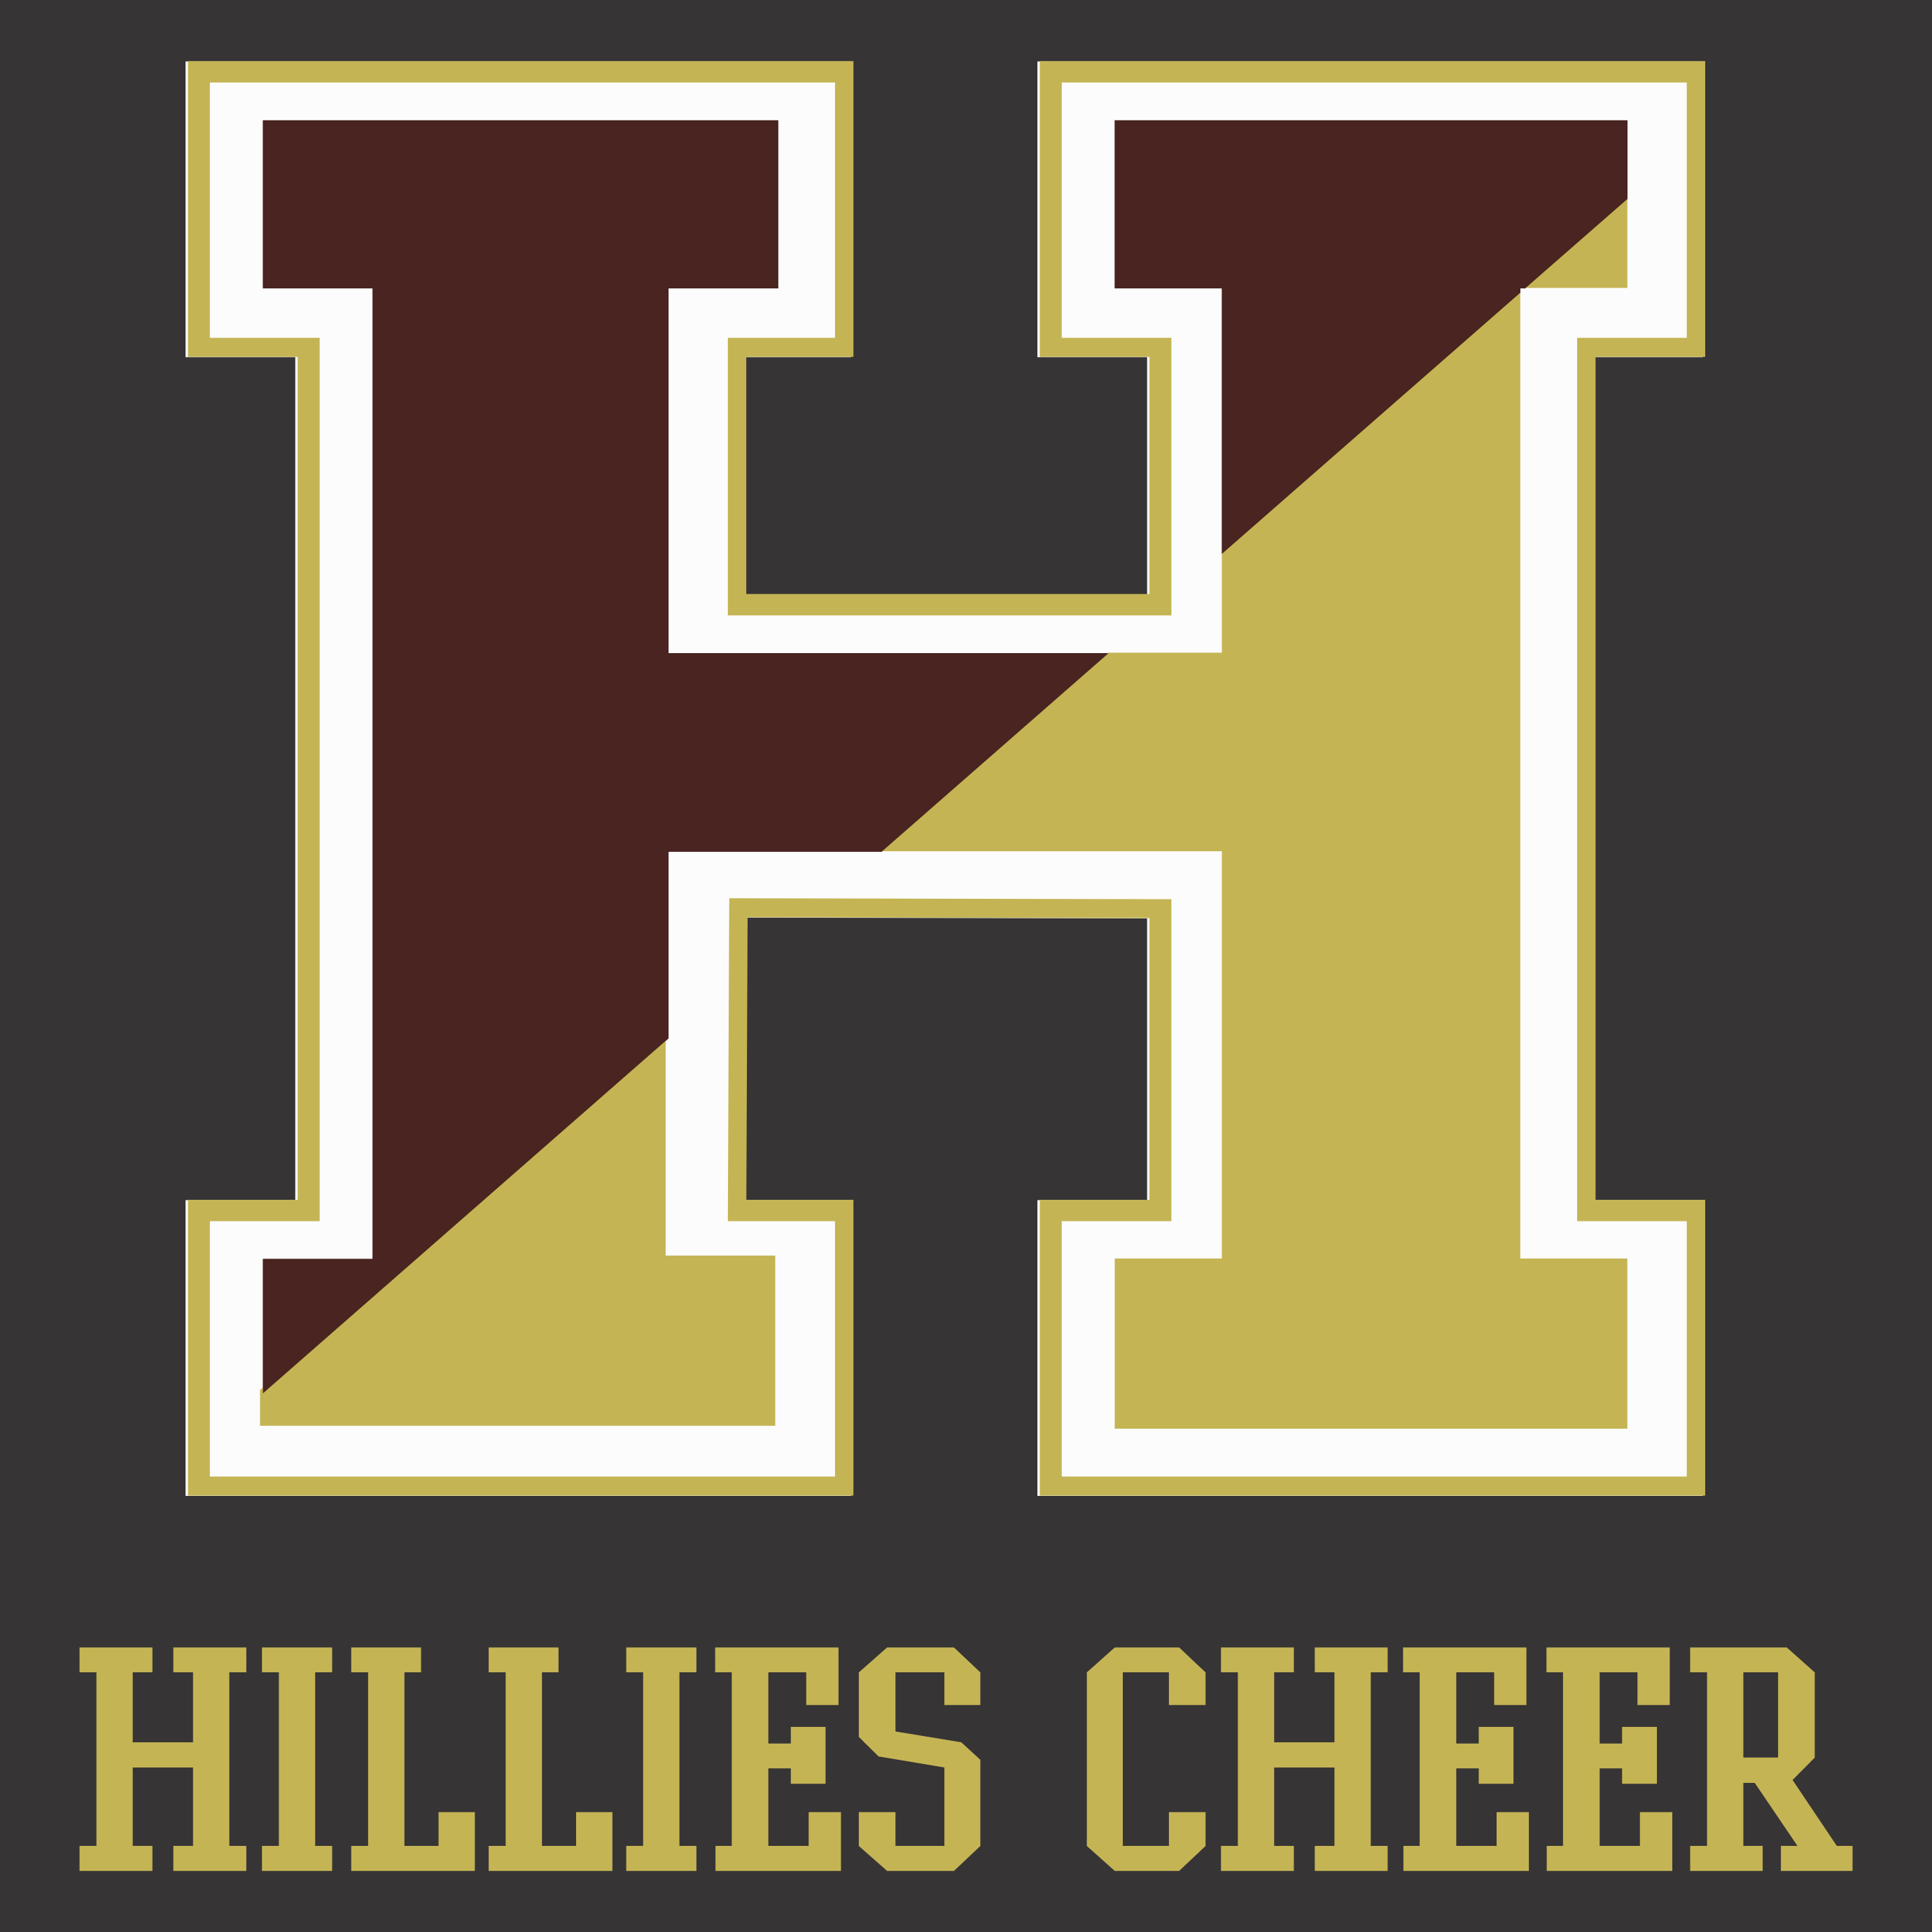 Hillies Cheer